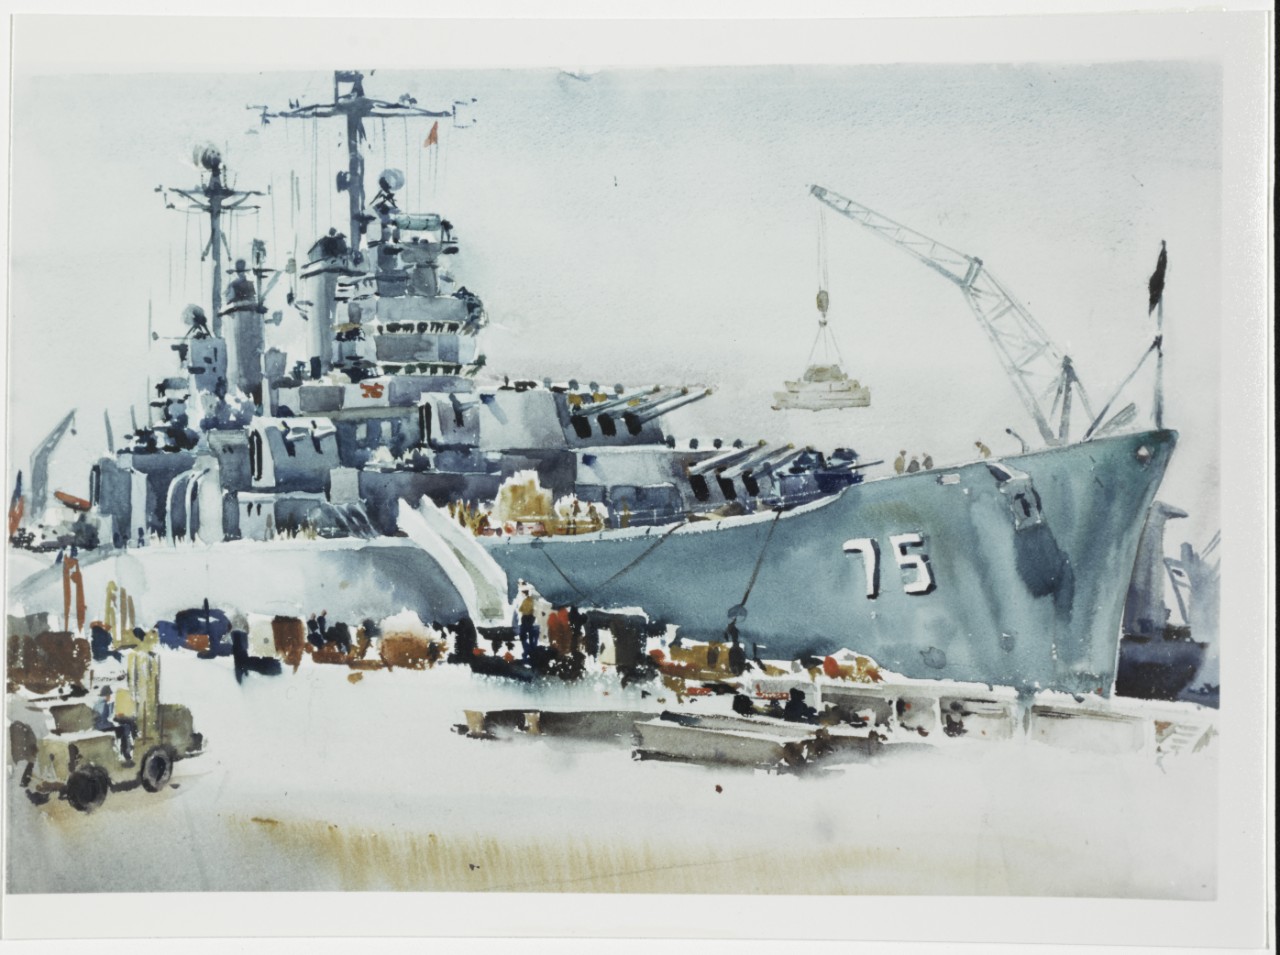 USS HELENA (CA-75) "Crash Deployment Suez Crisis 1956"